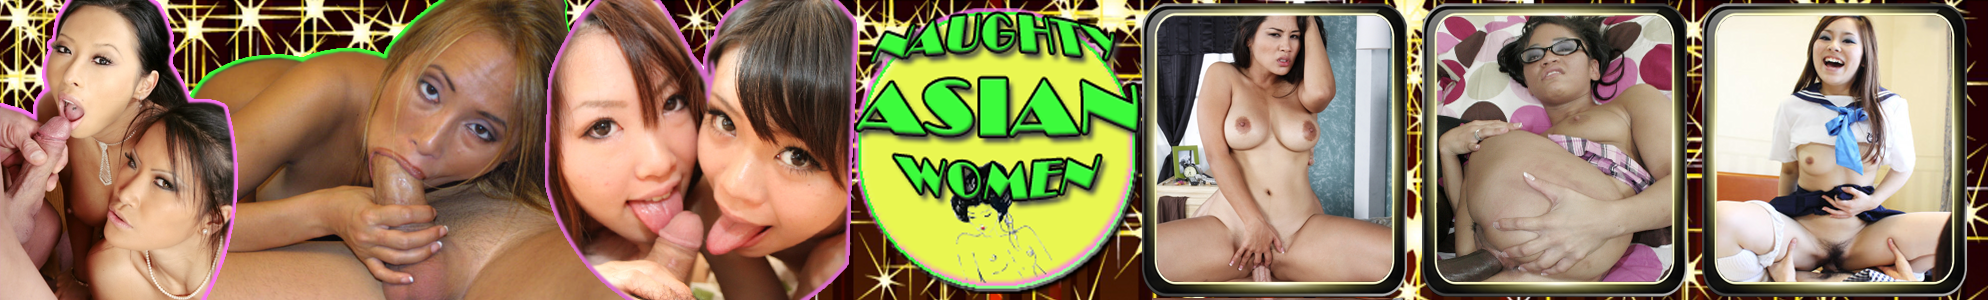 Naughty Asian Women